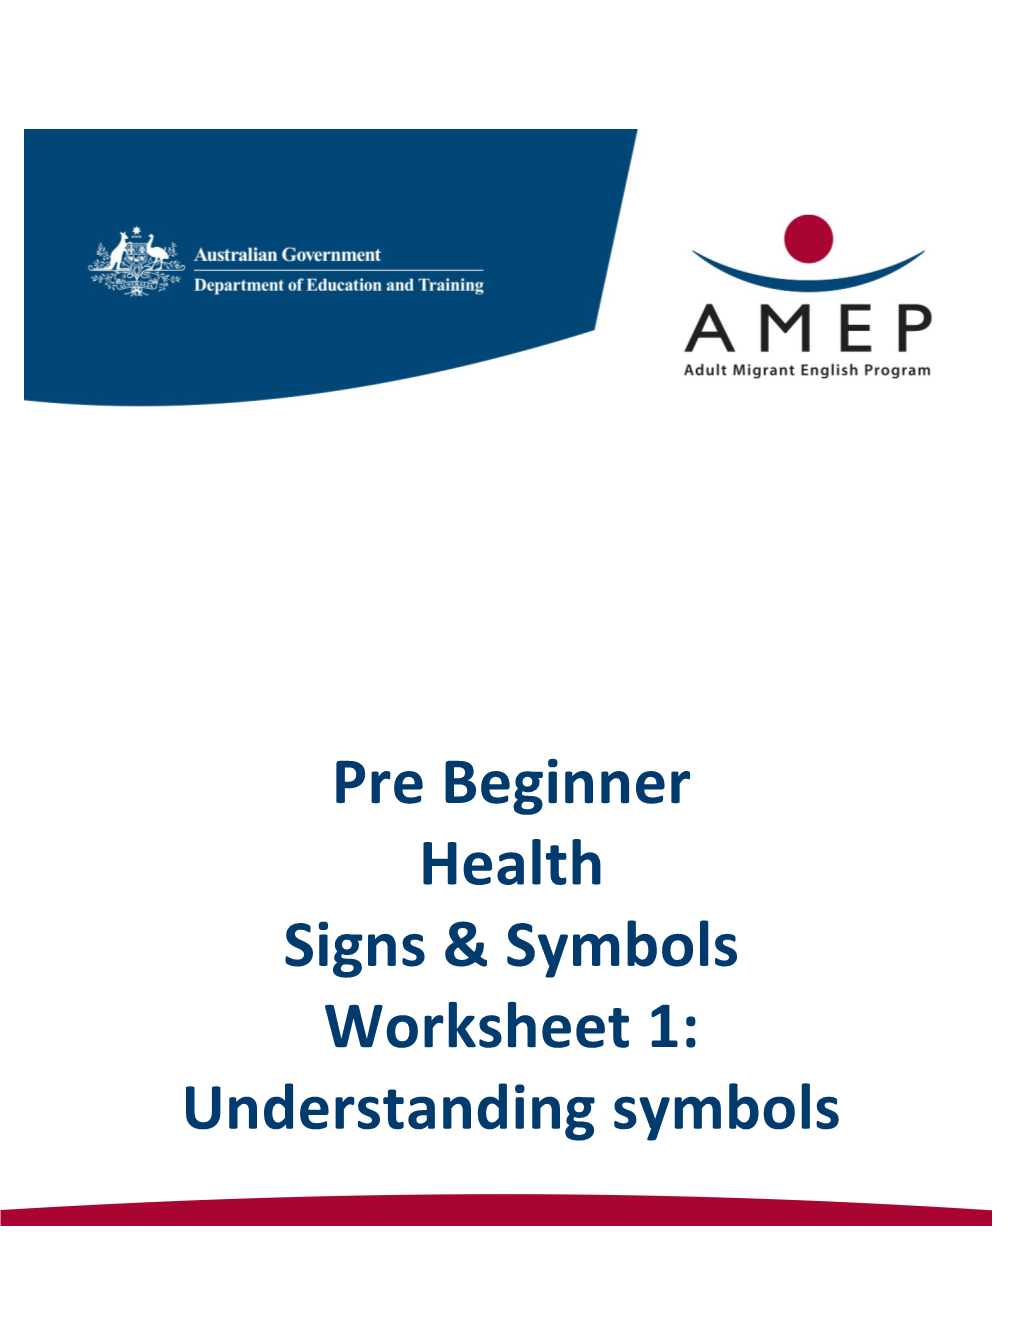 Pre Beginner Health Signs & Symbols Worksheet 1: Understanding Symbols